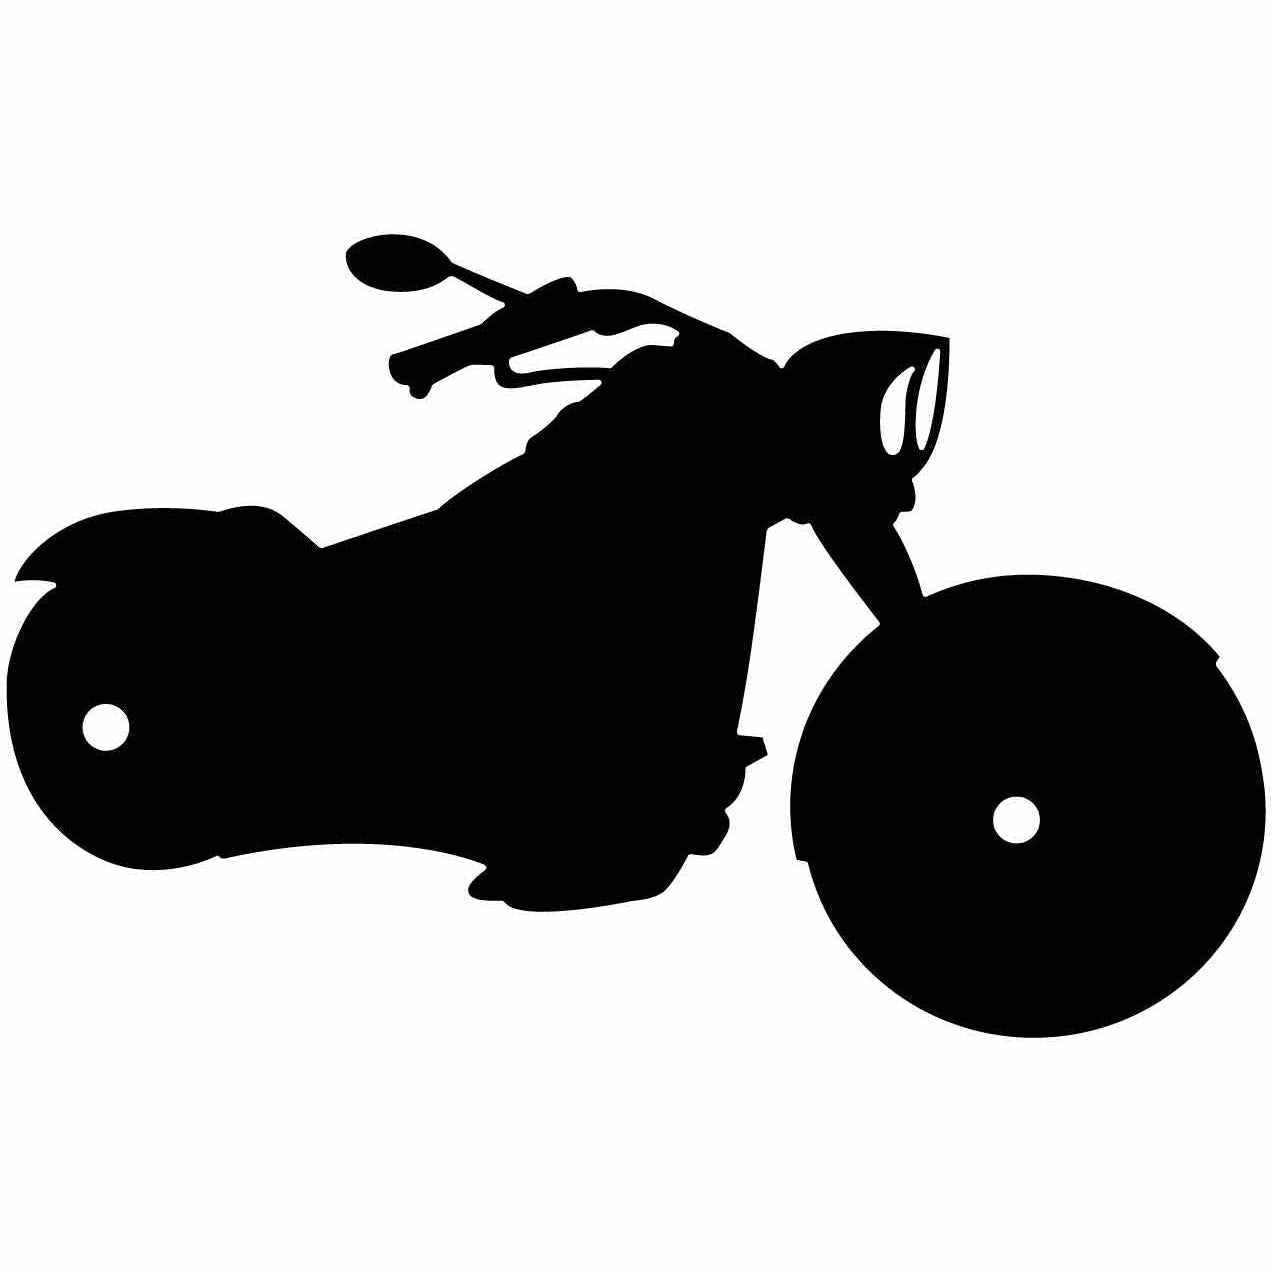 Motorcycle and Chopper Bike-Free DXF files Cut Ready CNC Designs-dxfforcnc.com